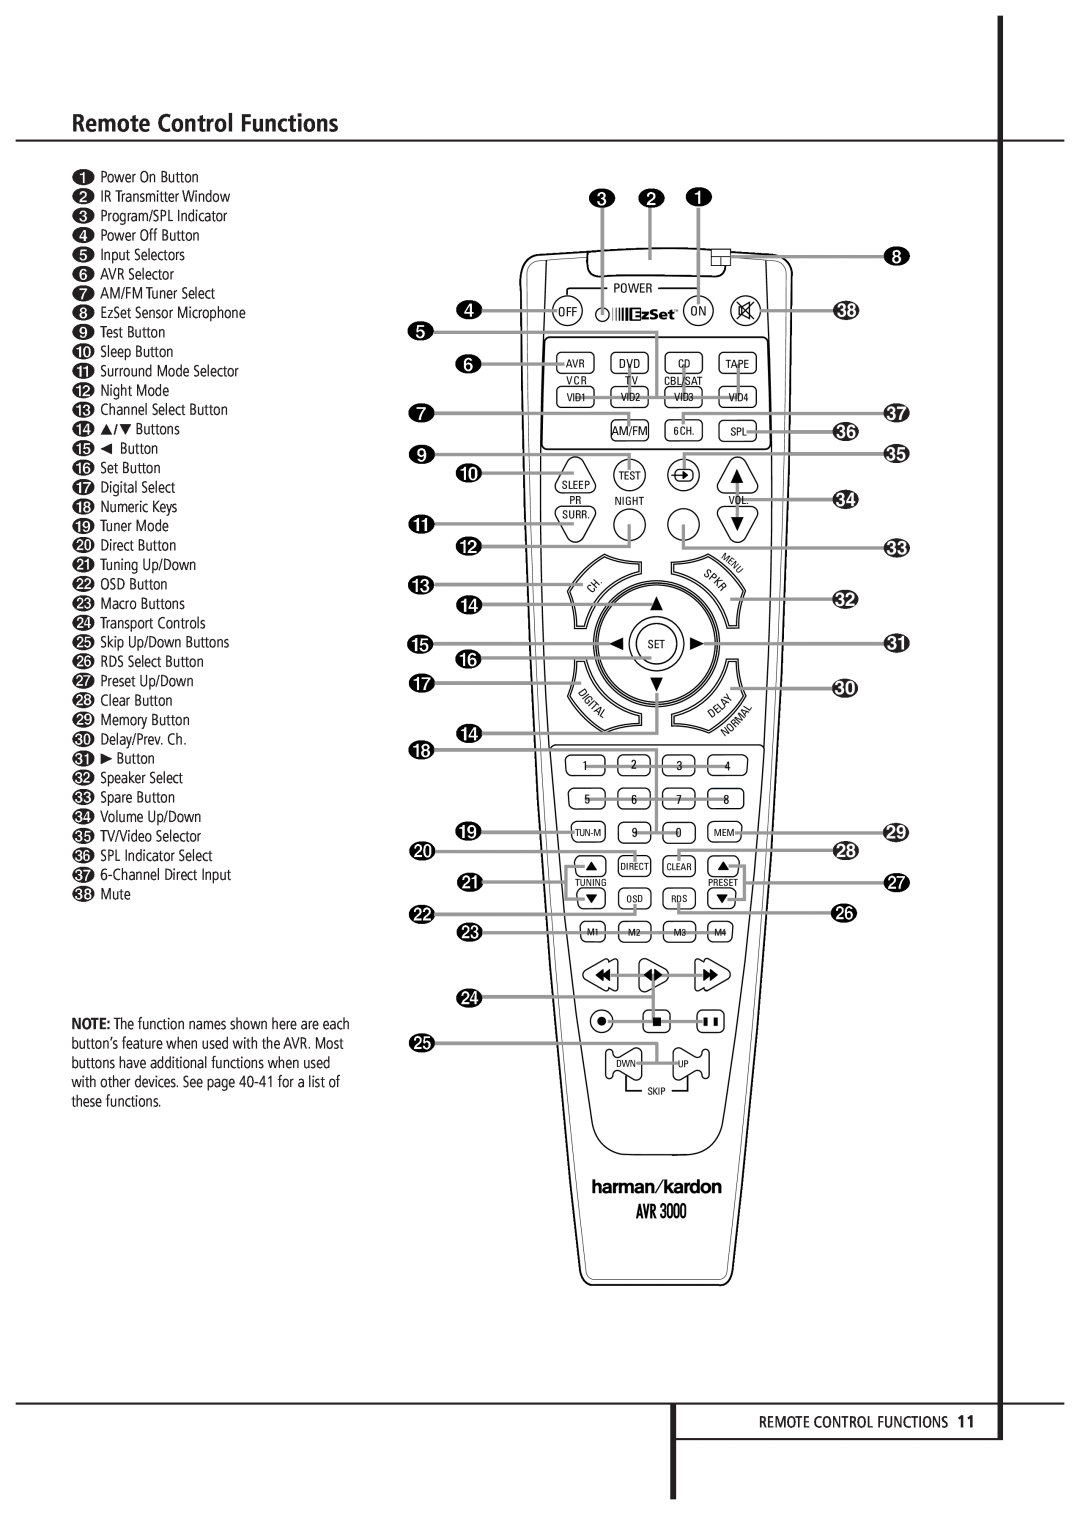 Harman-Kardon AVR 3000 owner manual Remote Control Functions, c b a, 38 37 36 35 34 33 32 